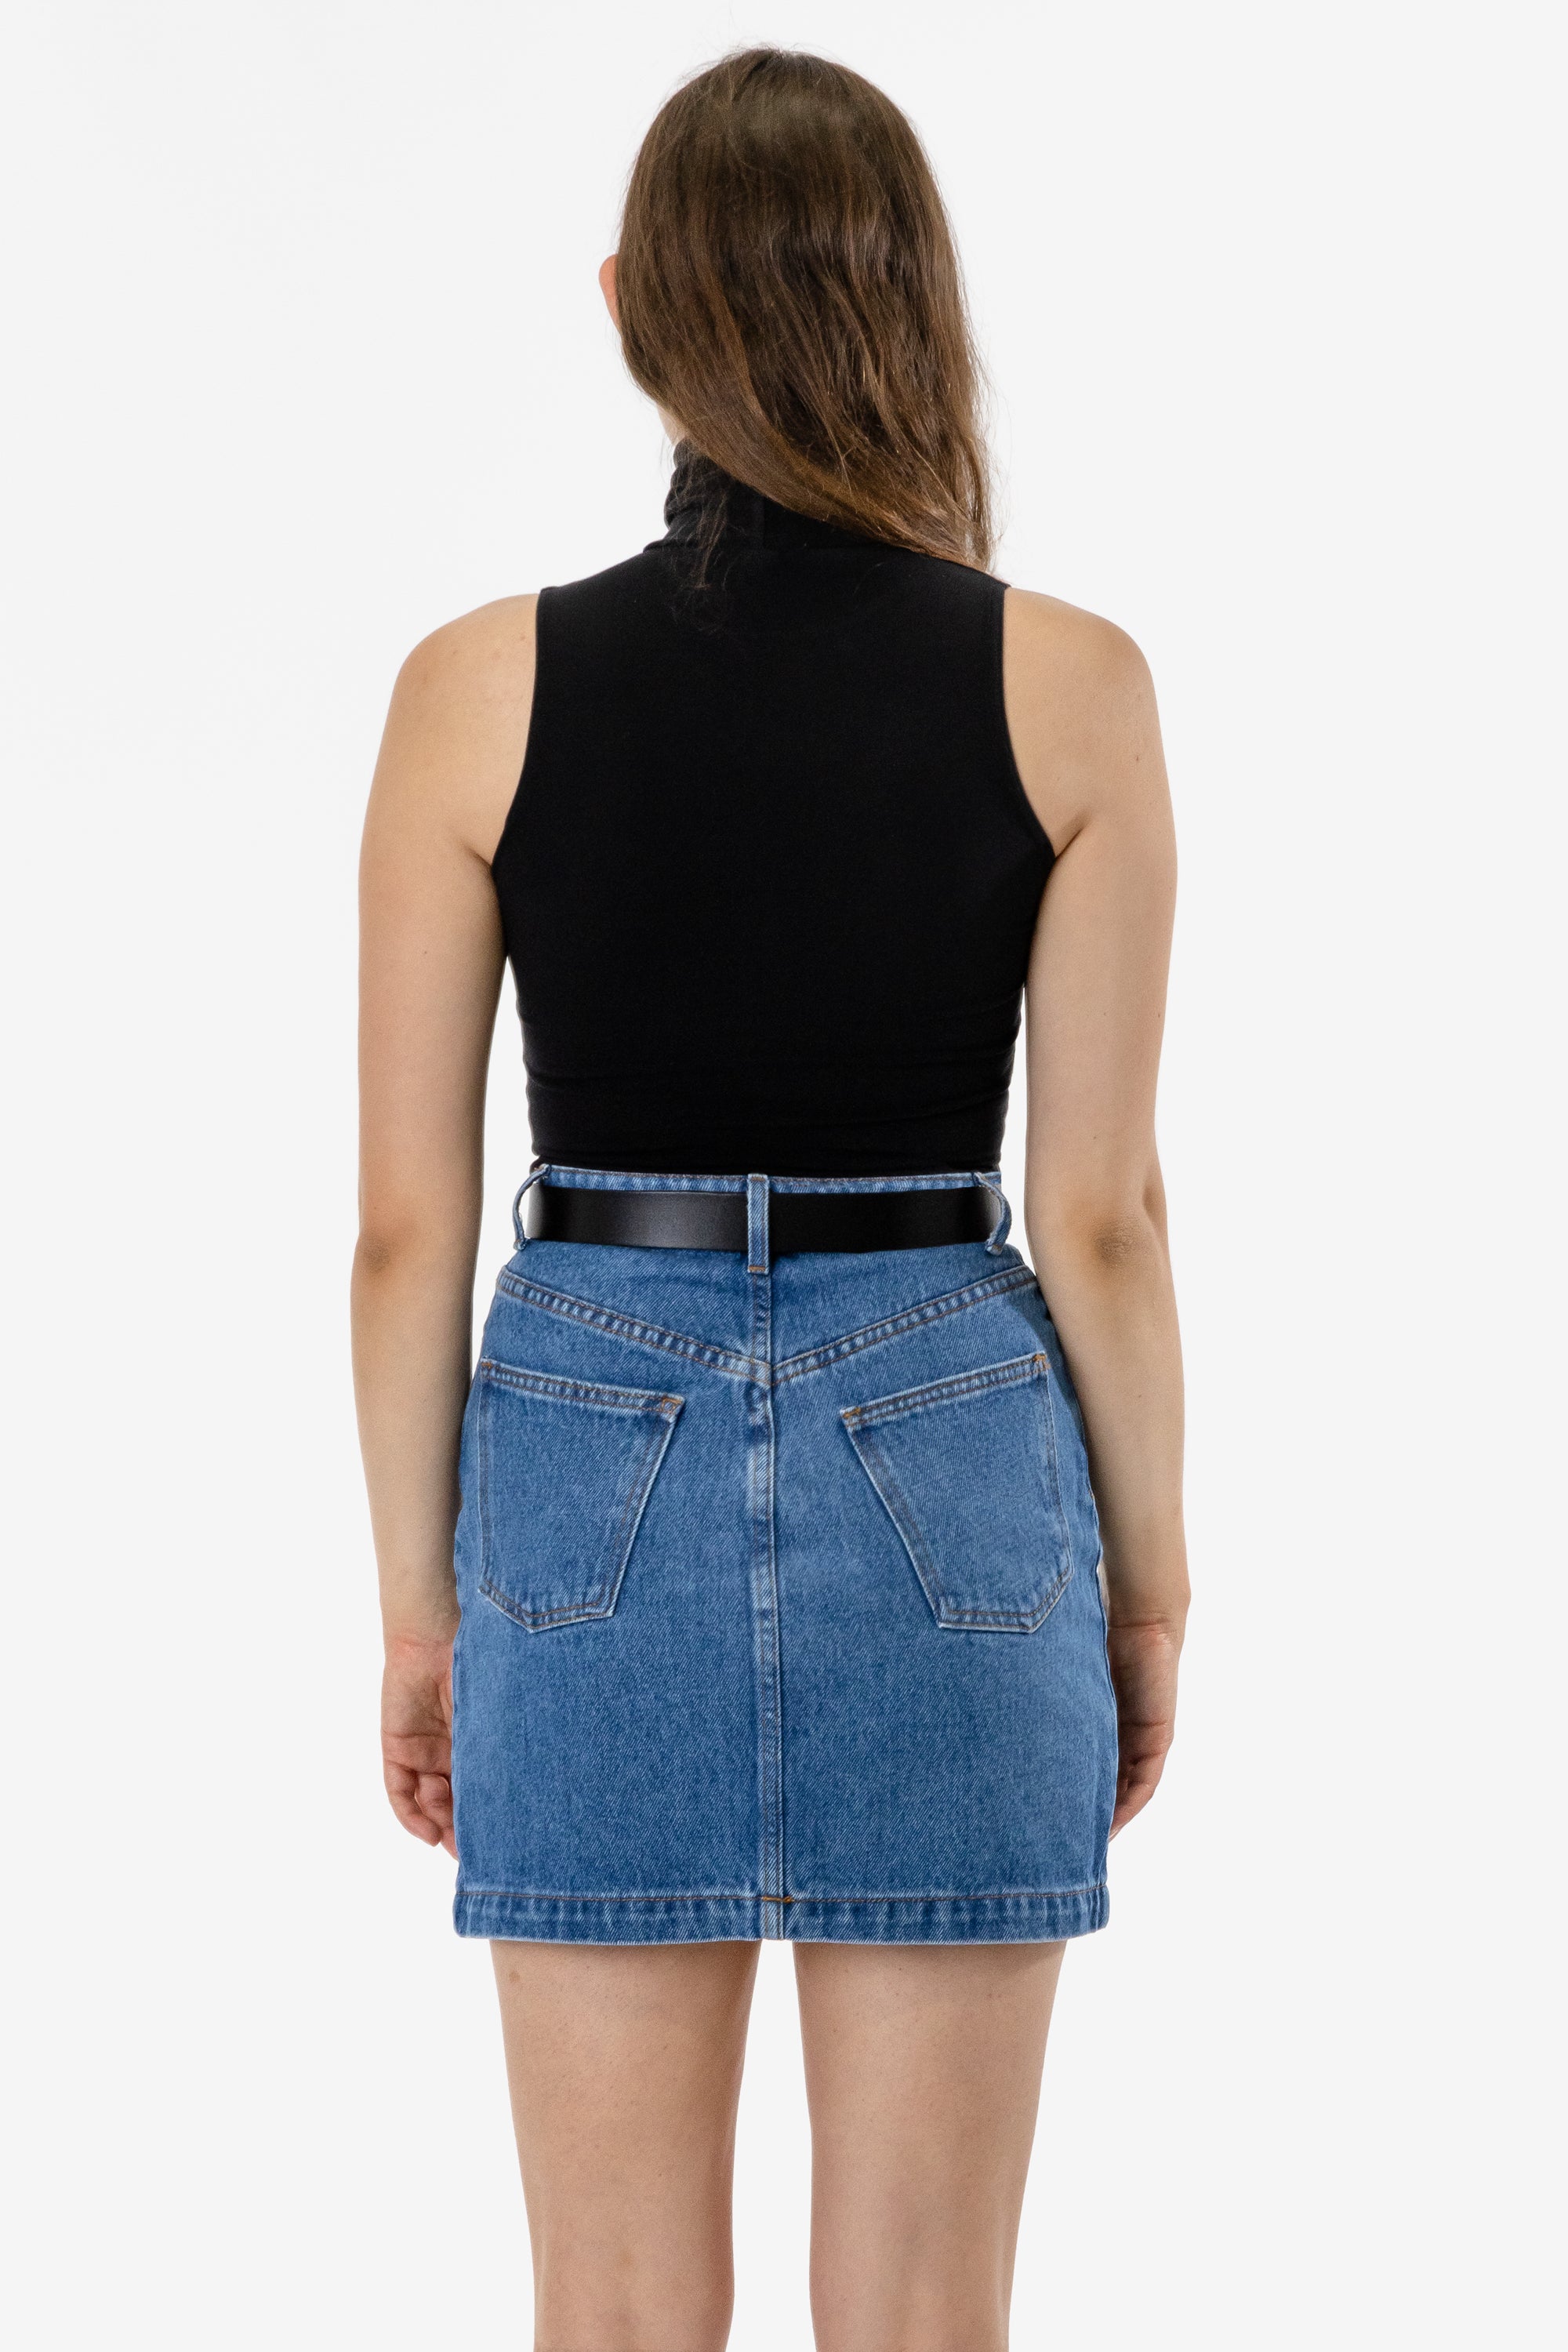 RDNW33 - Denim Mini Skirt – Los Angeles Apparel